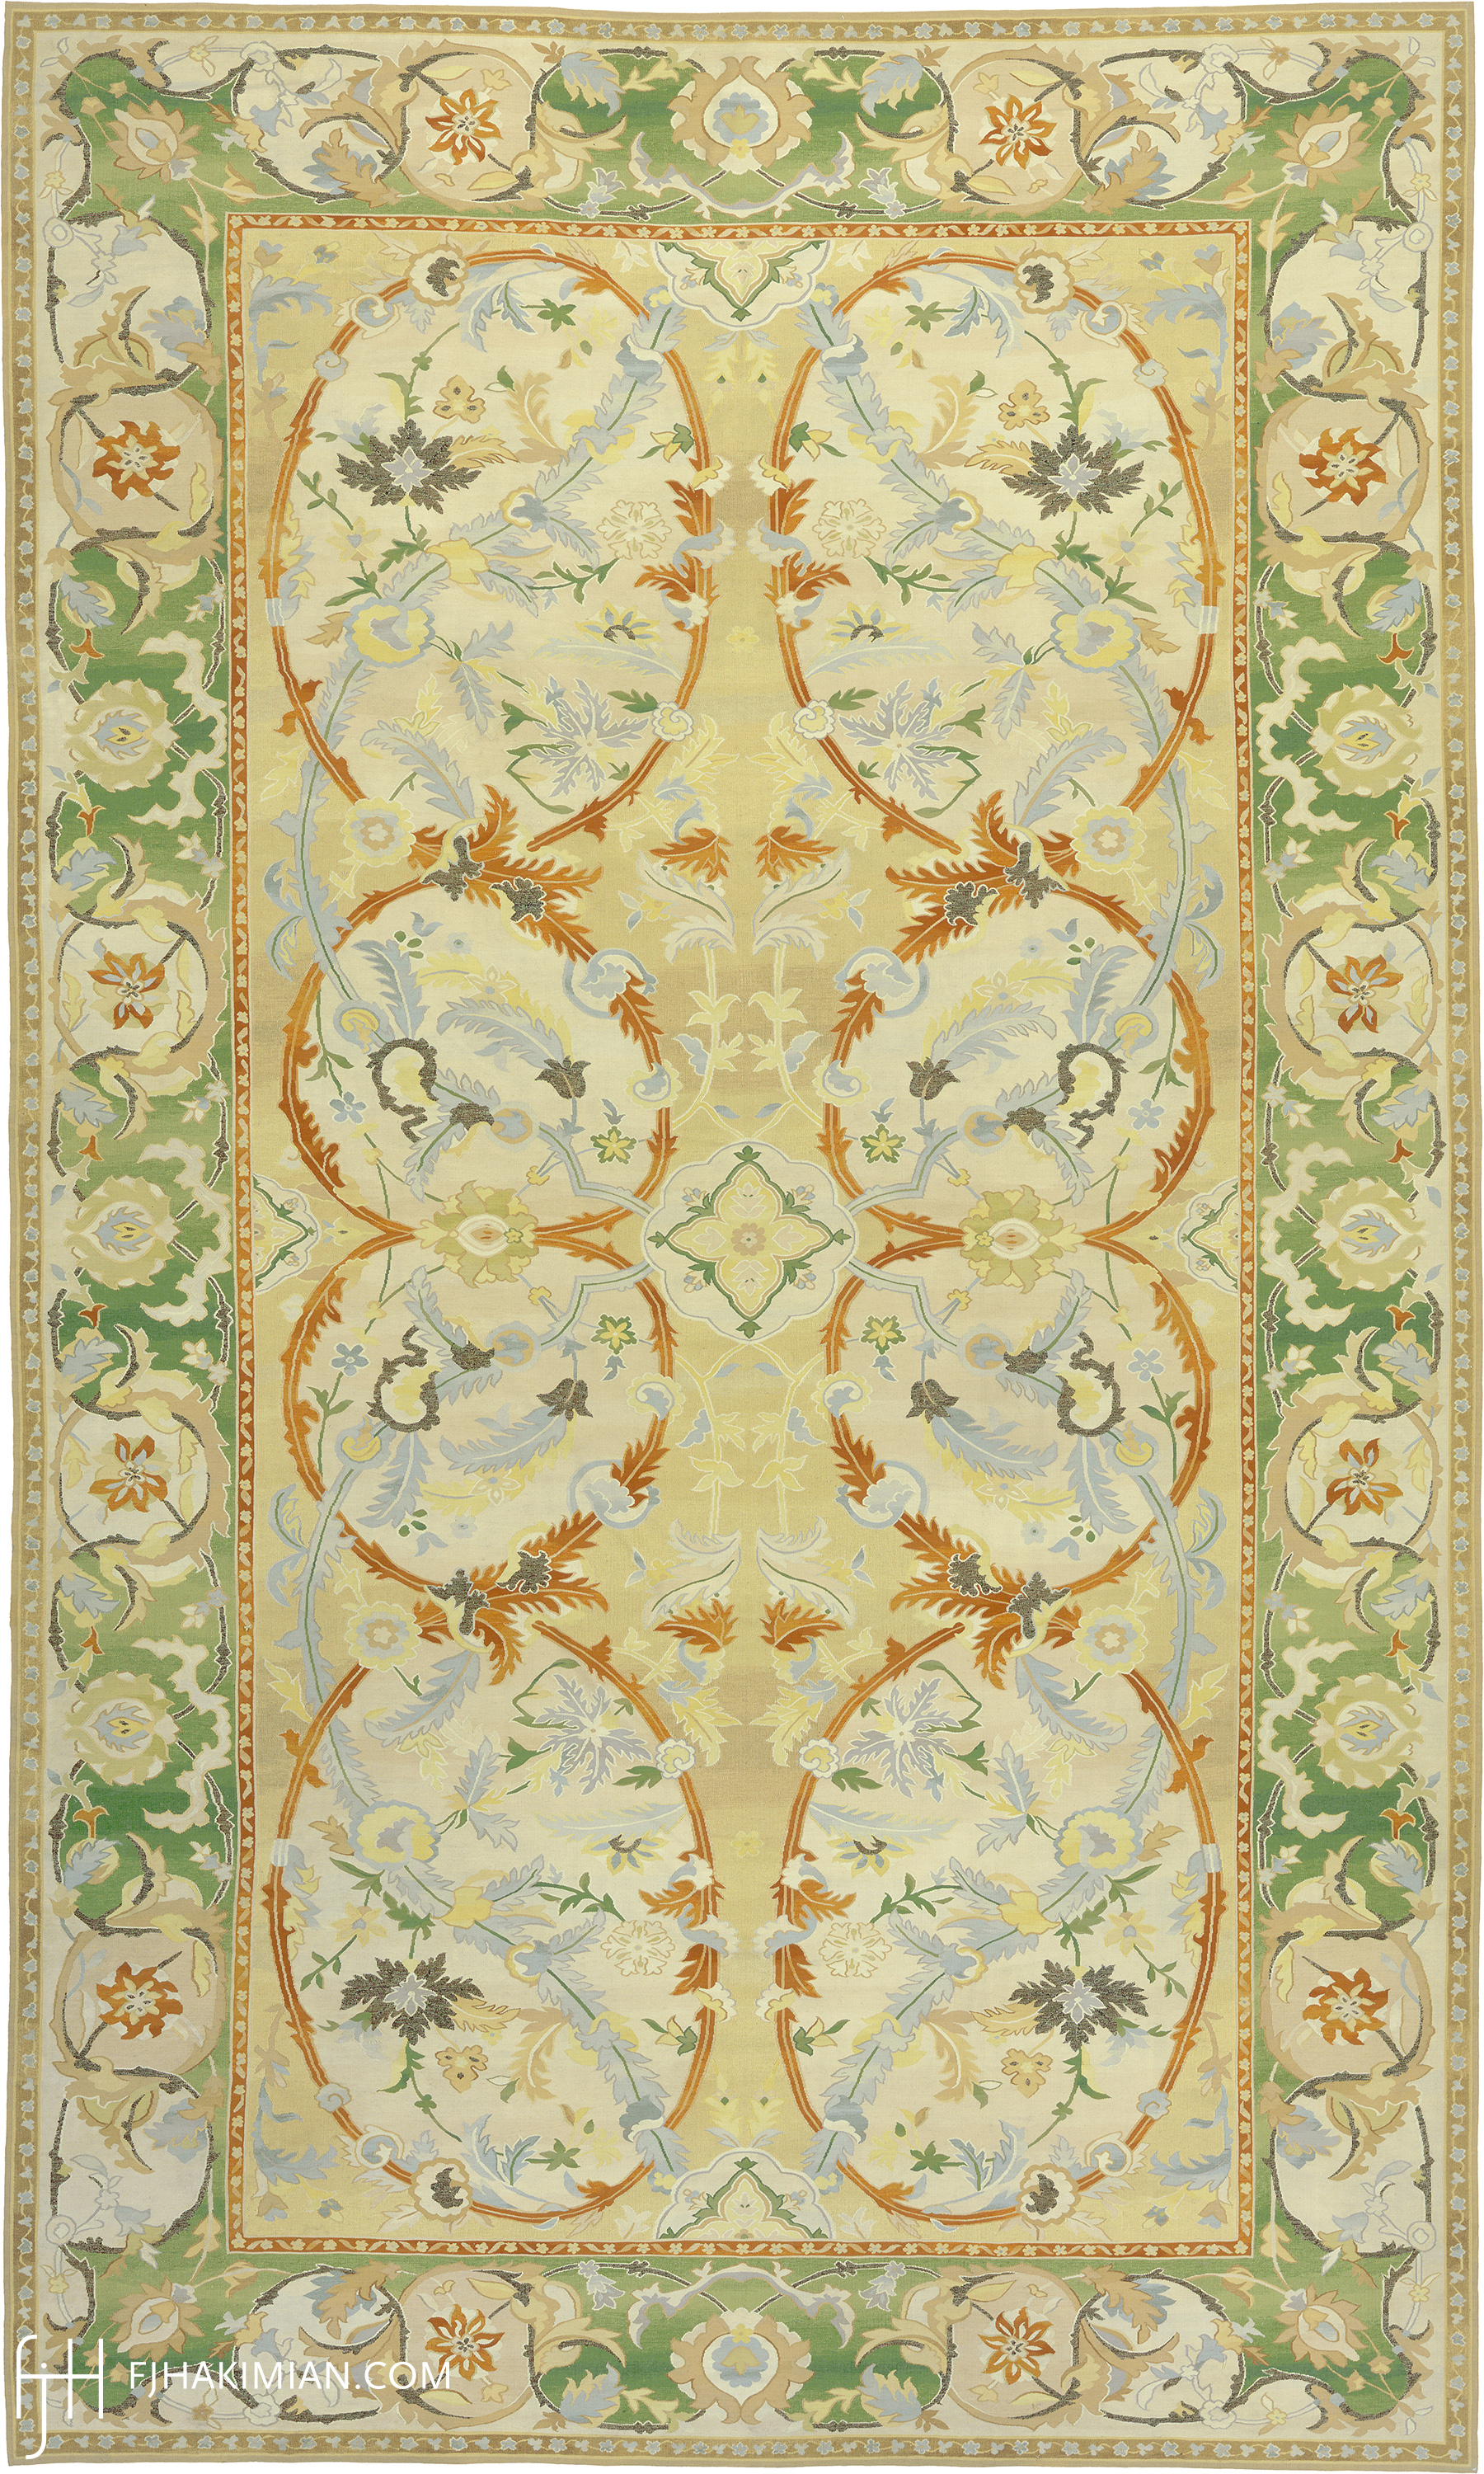 16784 Red Vine | Custom Traditional Design Carpet | FJ Hakimian | Carpet Gallery in NYC